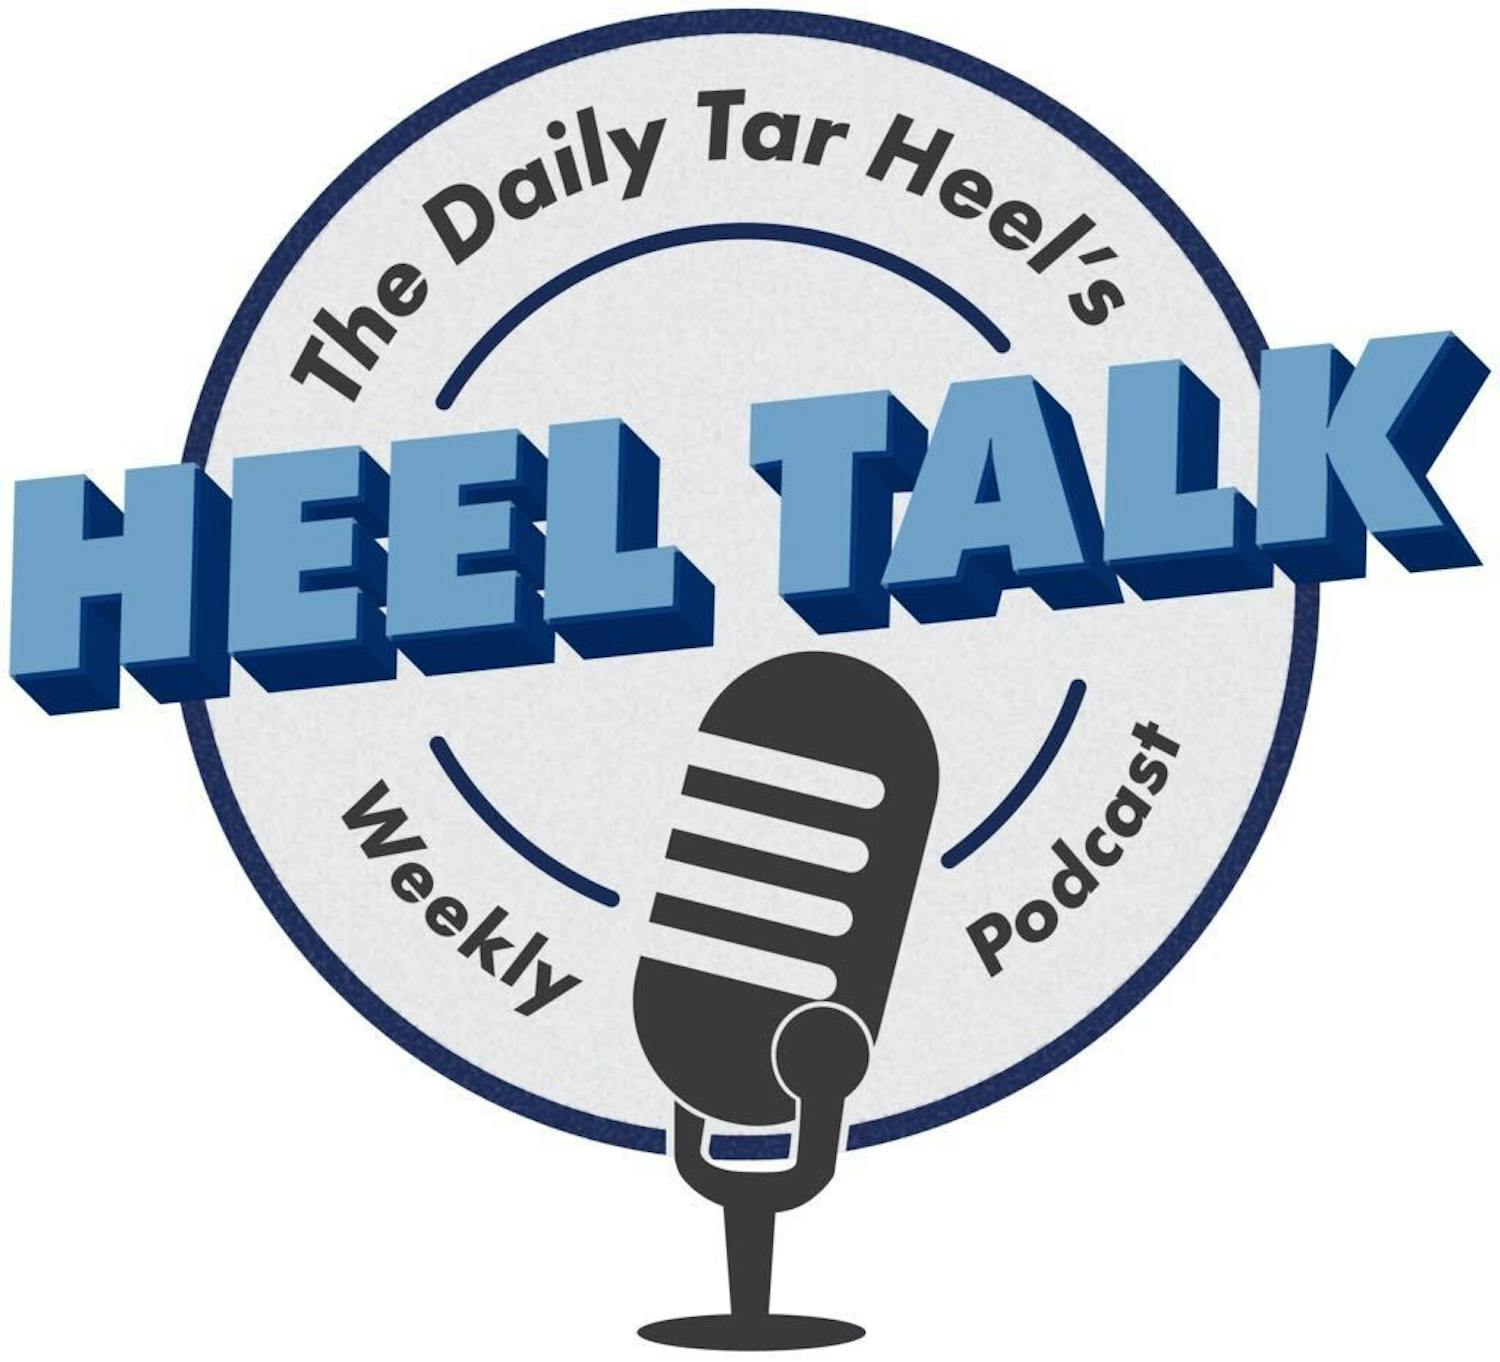 Heel-talk-column-0414